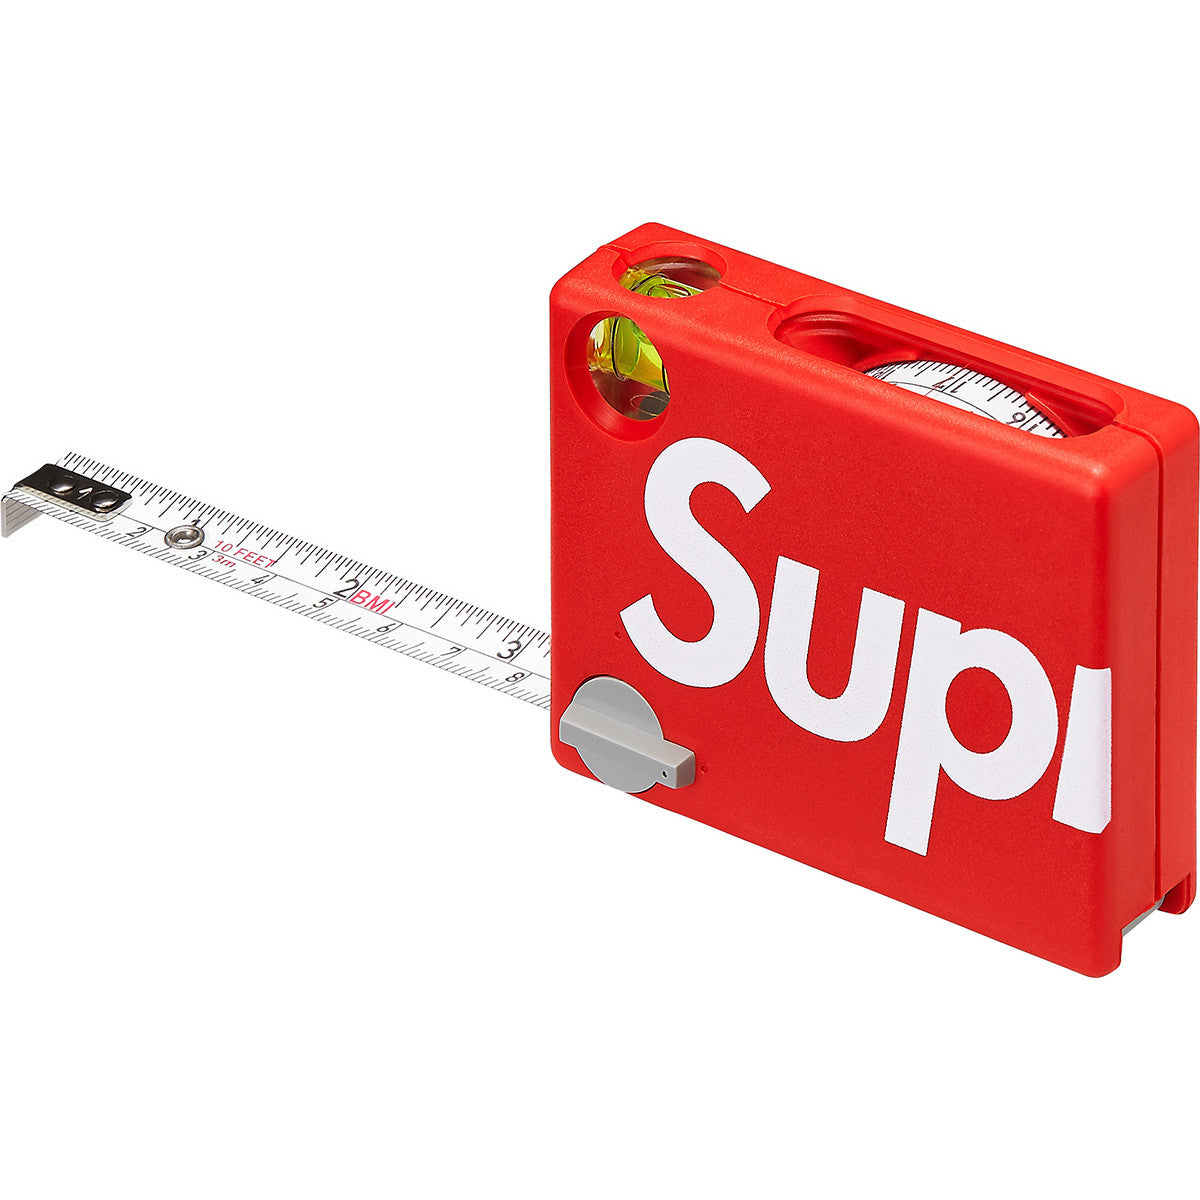 SUPREME measuring tape